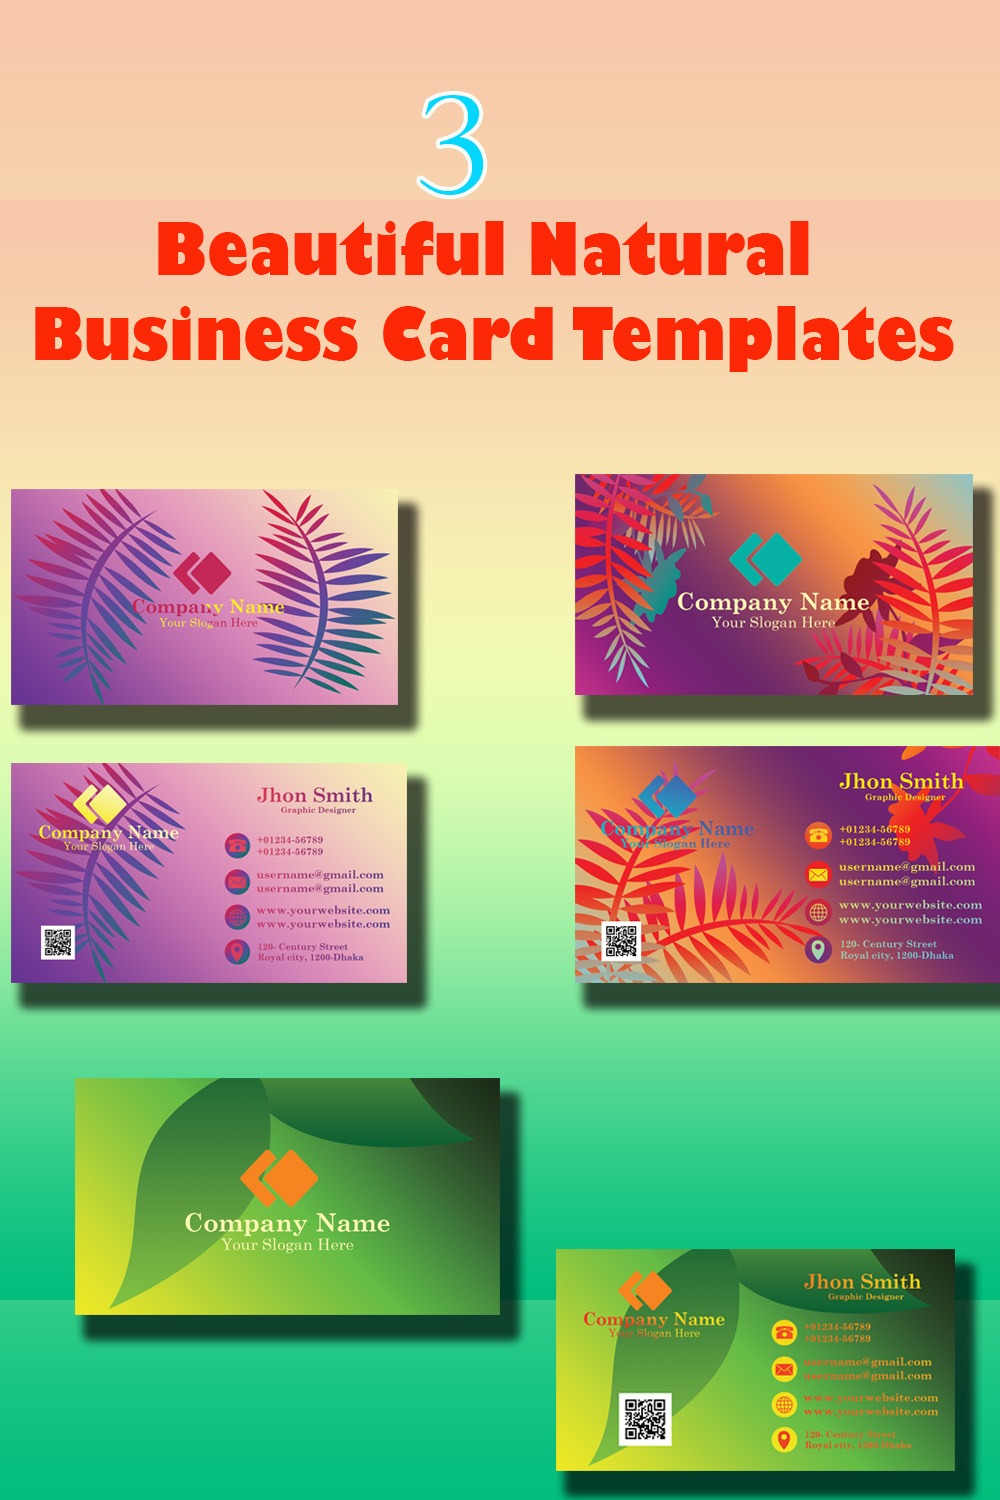 3 Natural & Leaf Design Business Card Templates pinterest preview image.